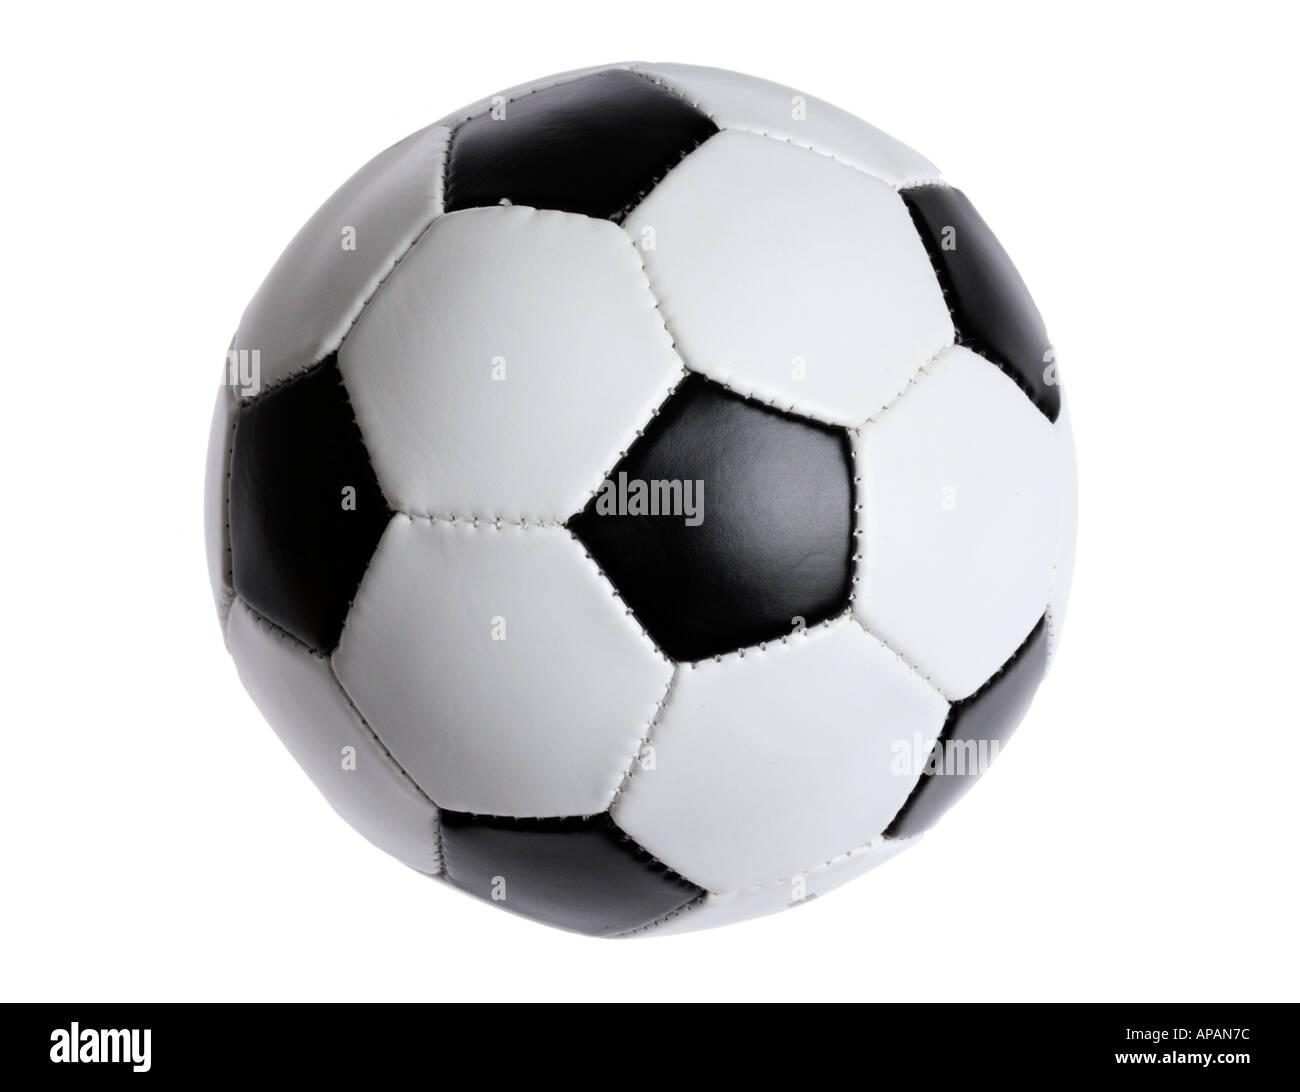 Ballon de soccer Foot Banque D'Images